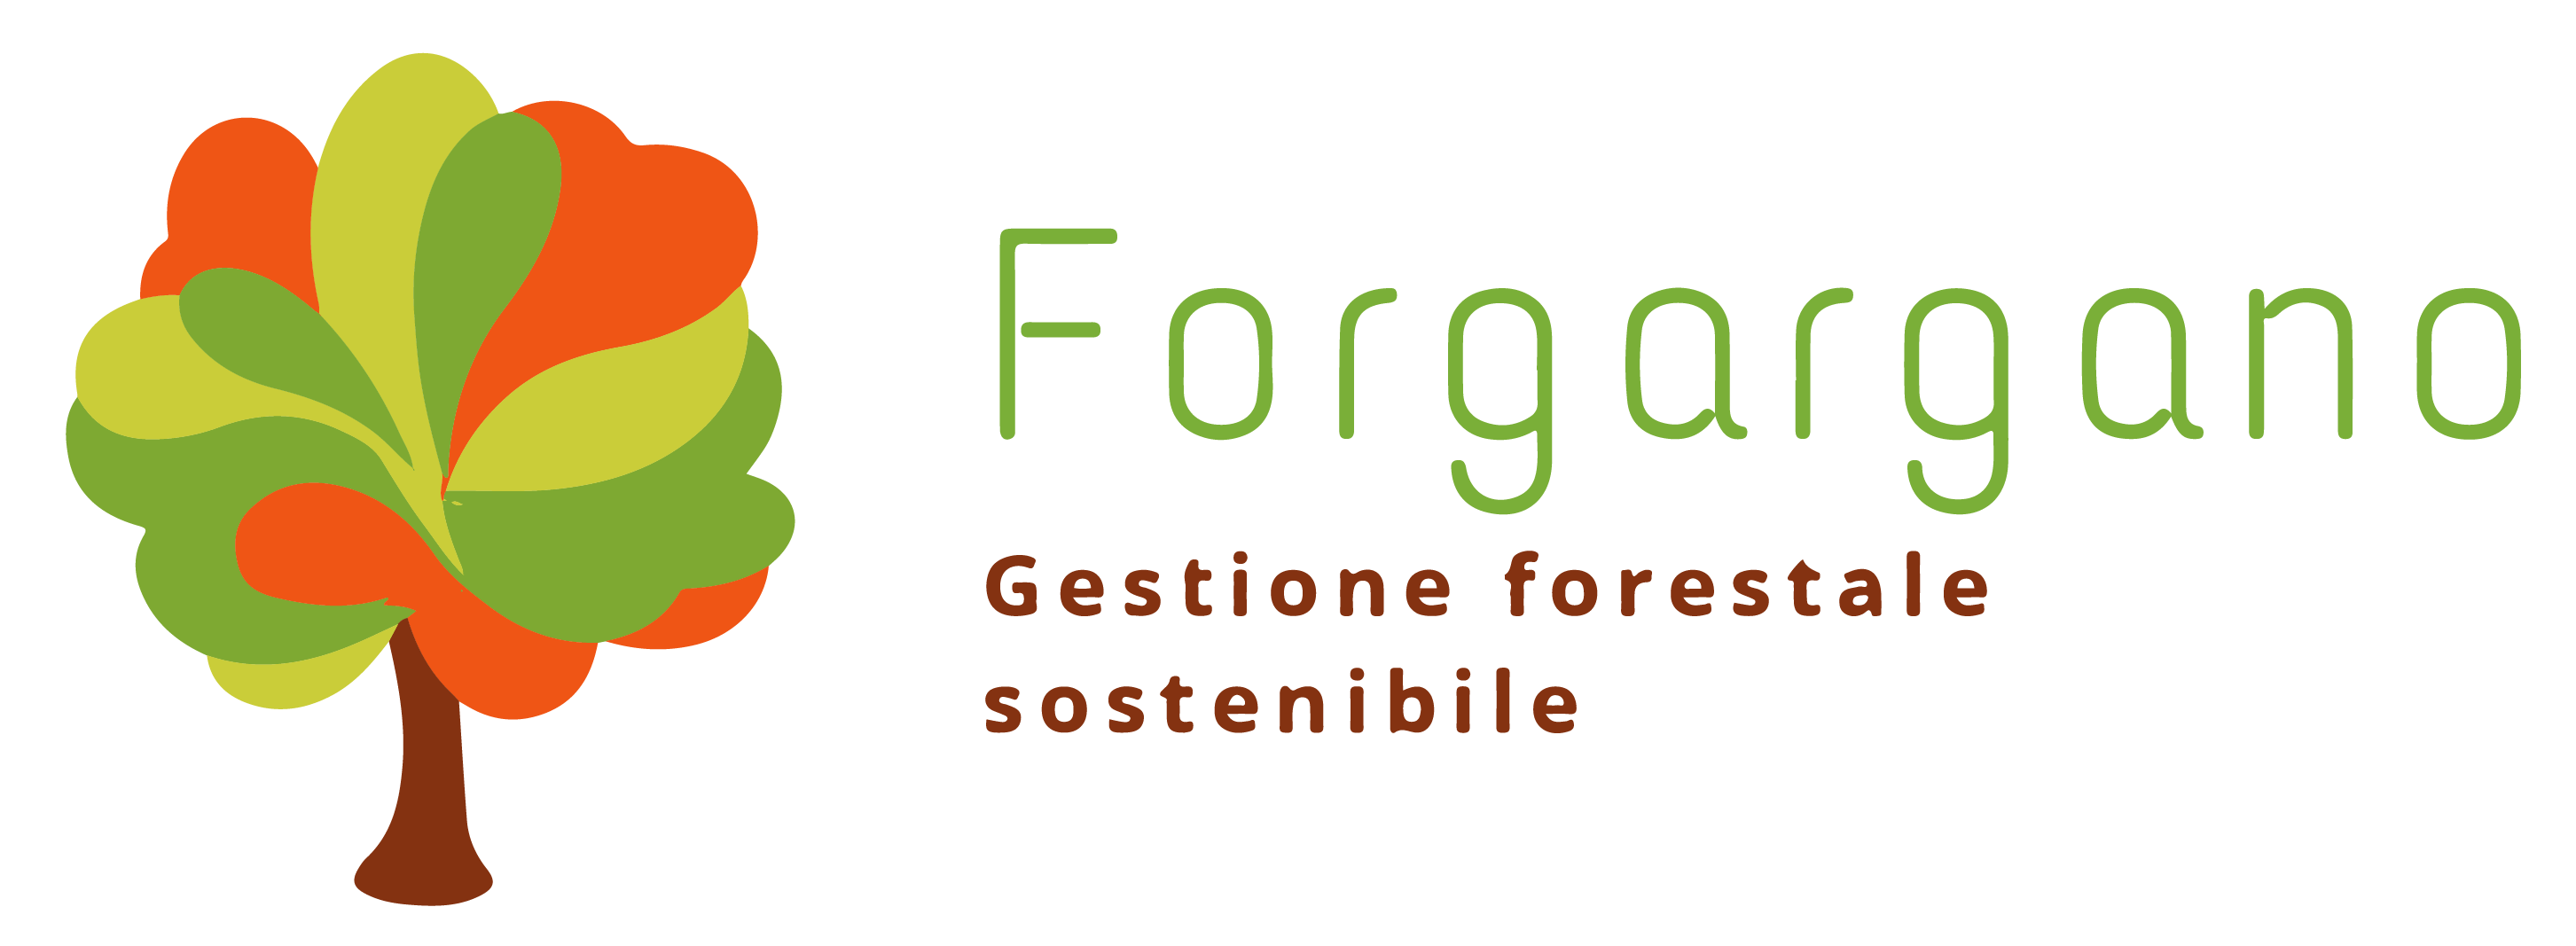 Logo Forgargano-01-01 (1)